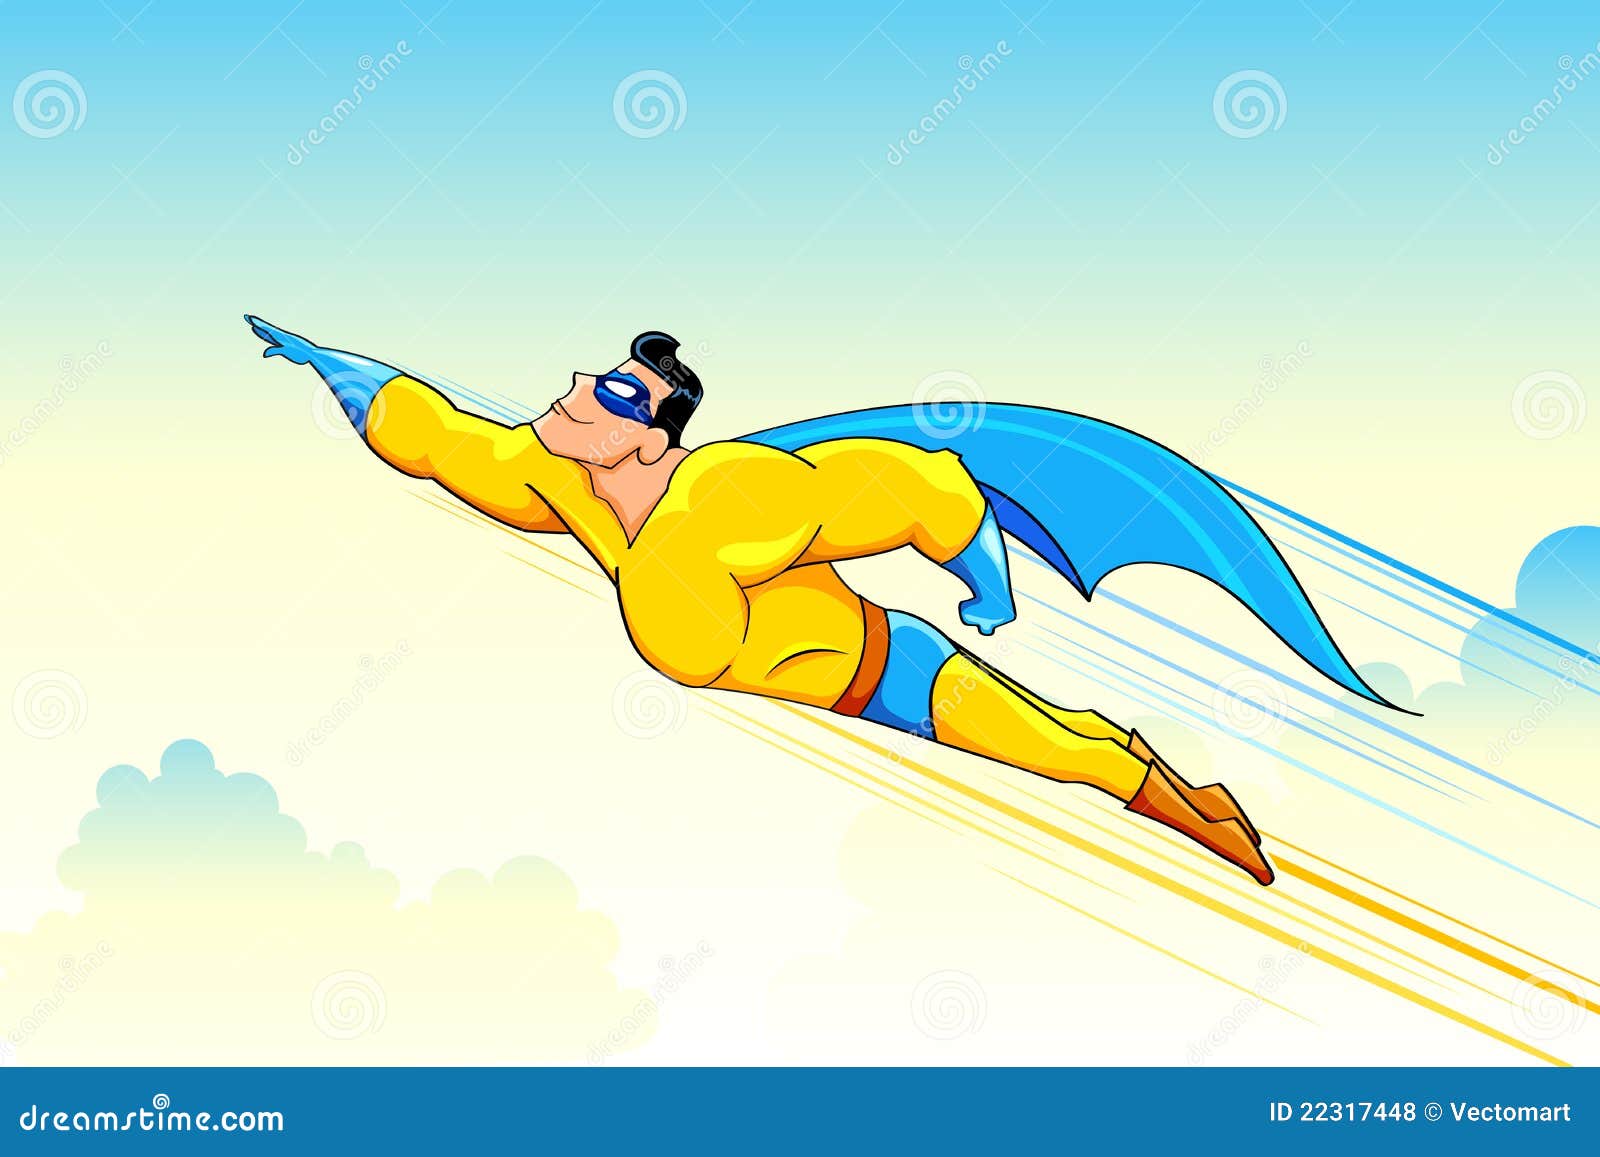 Flying Superhero Royalty Free Stock Photos  Image: 22317448